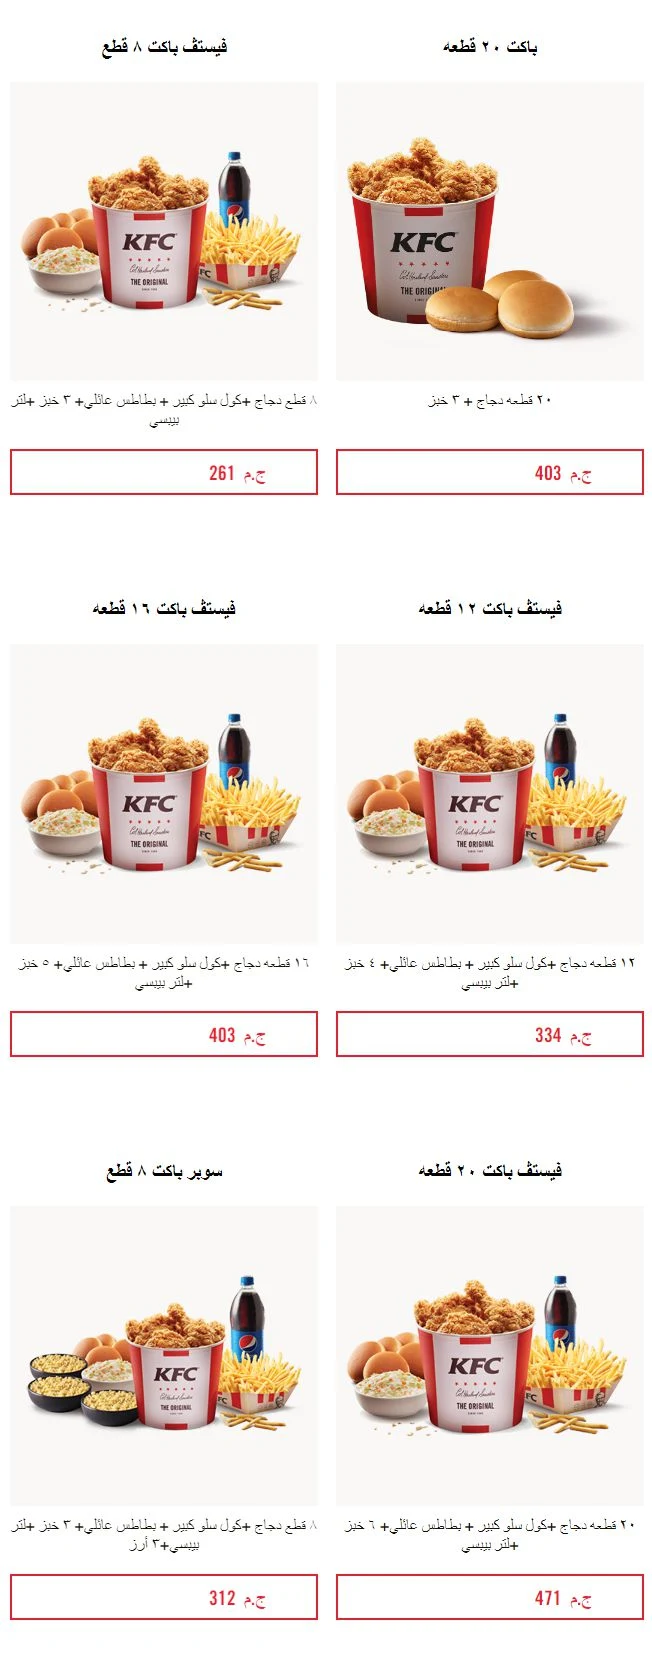 اسعار منيو مطعم كنتاكي «KFC» مصر , رقم التوصيل و الدليفري